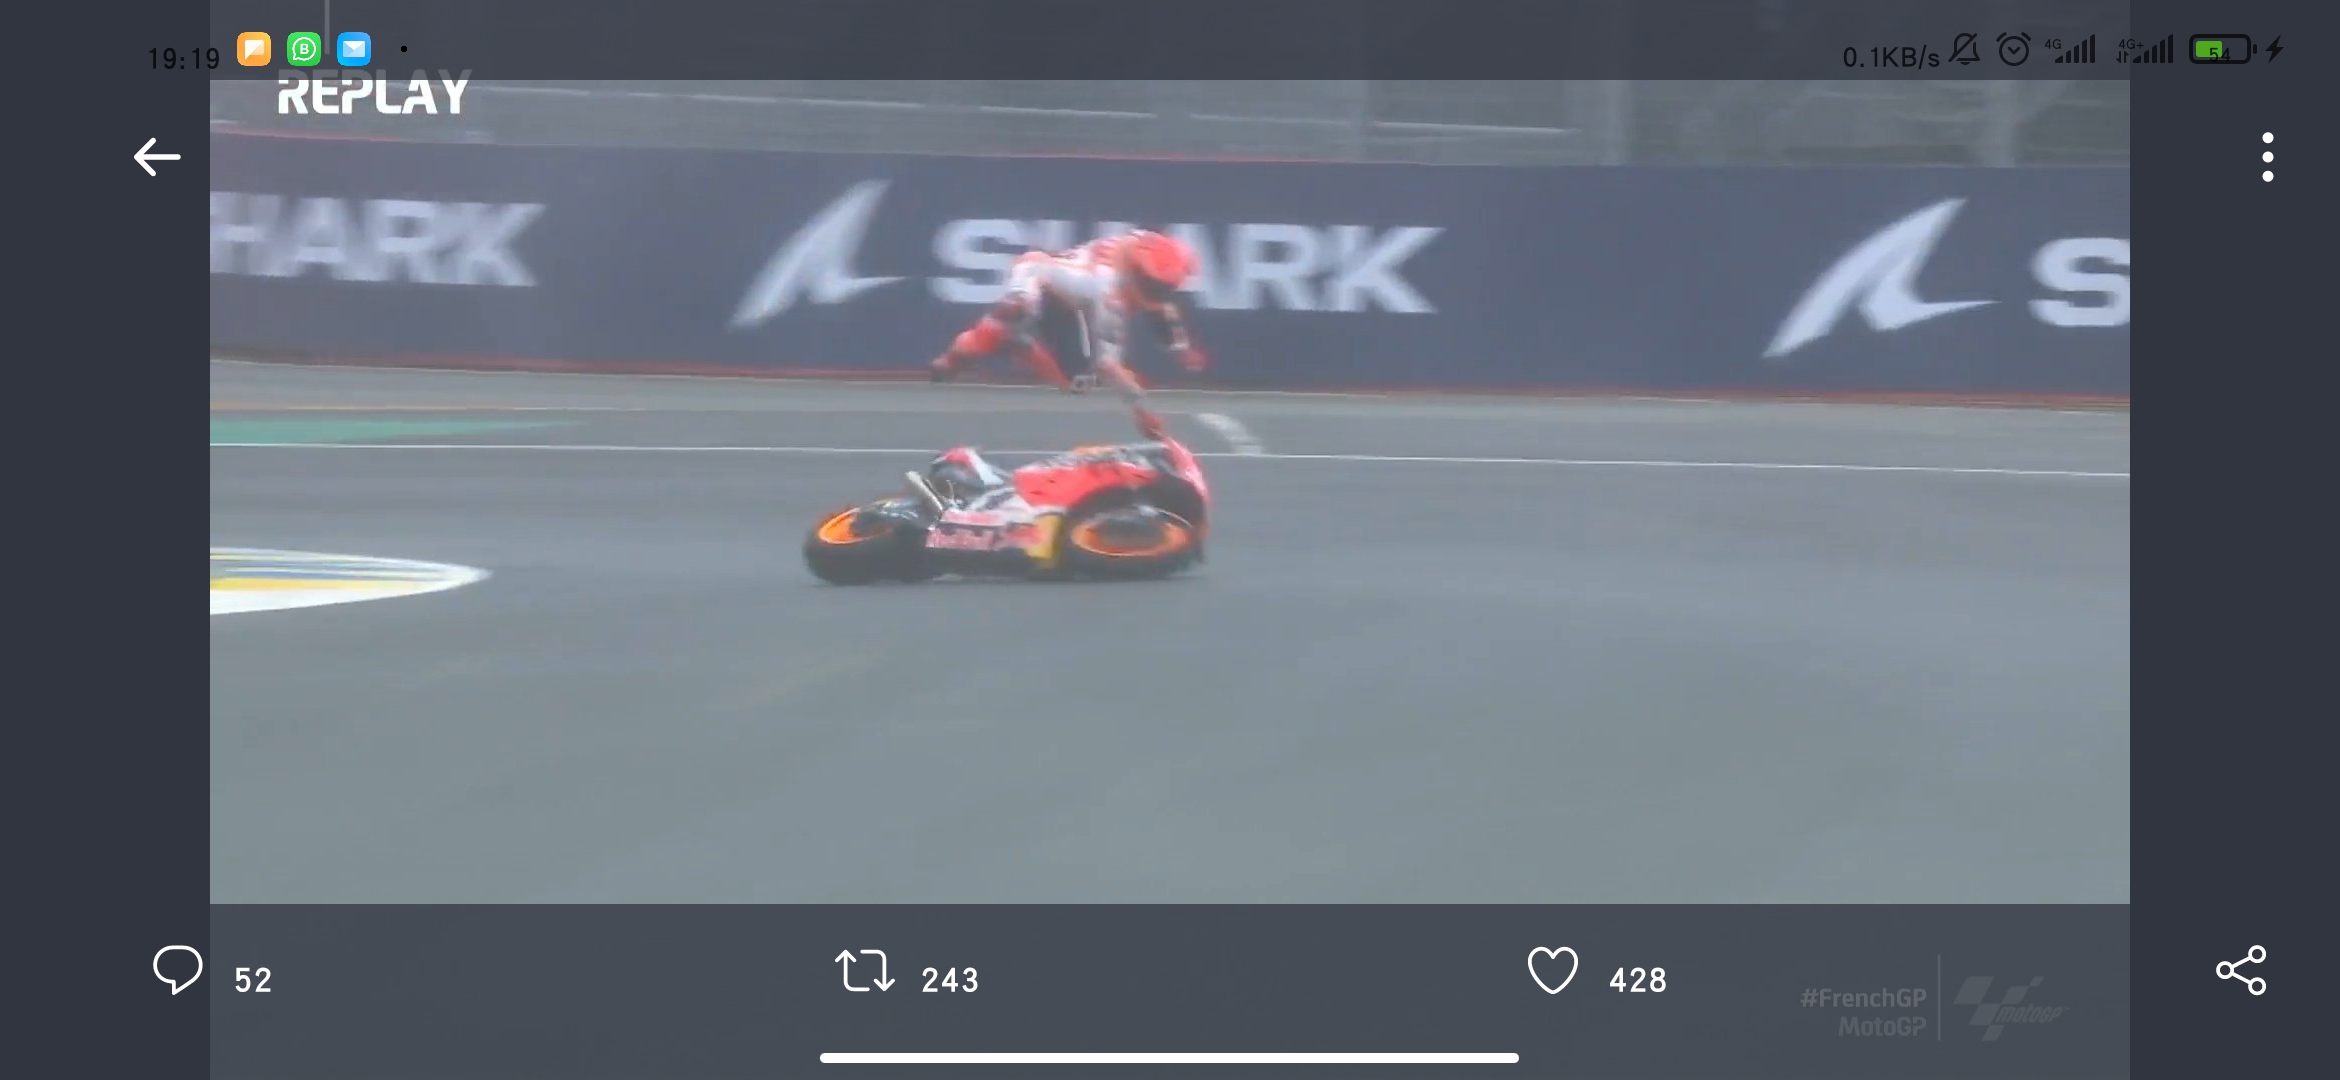 Jatuh 2 Kali di Le Mans, Marc Marquez Deja Vu Tragedi Kelam MotoGP Spanyol 2020